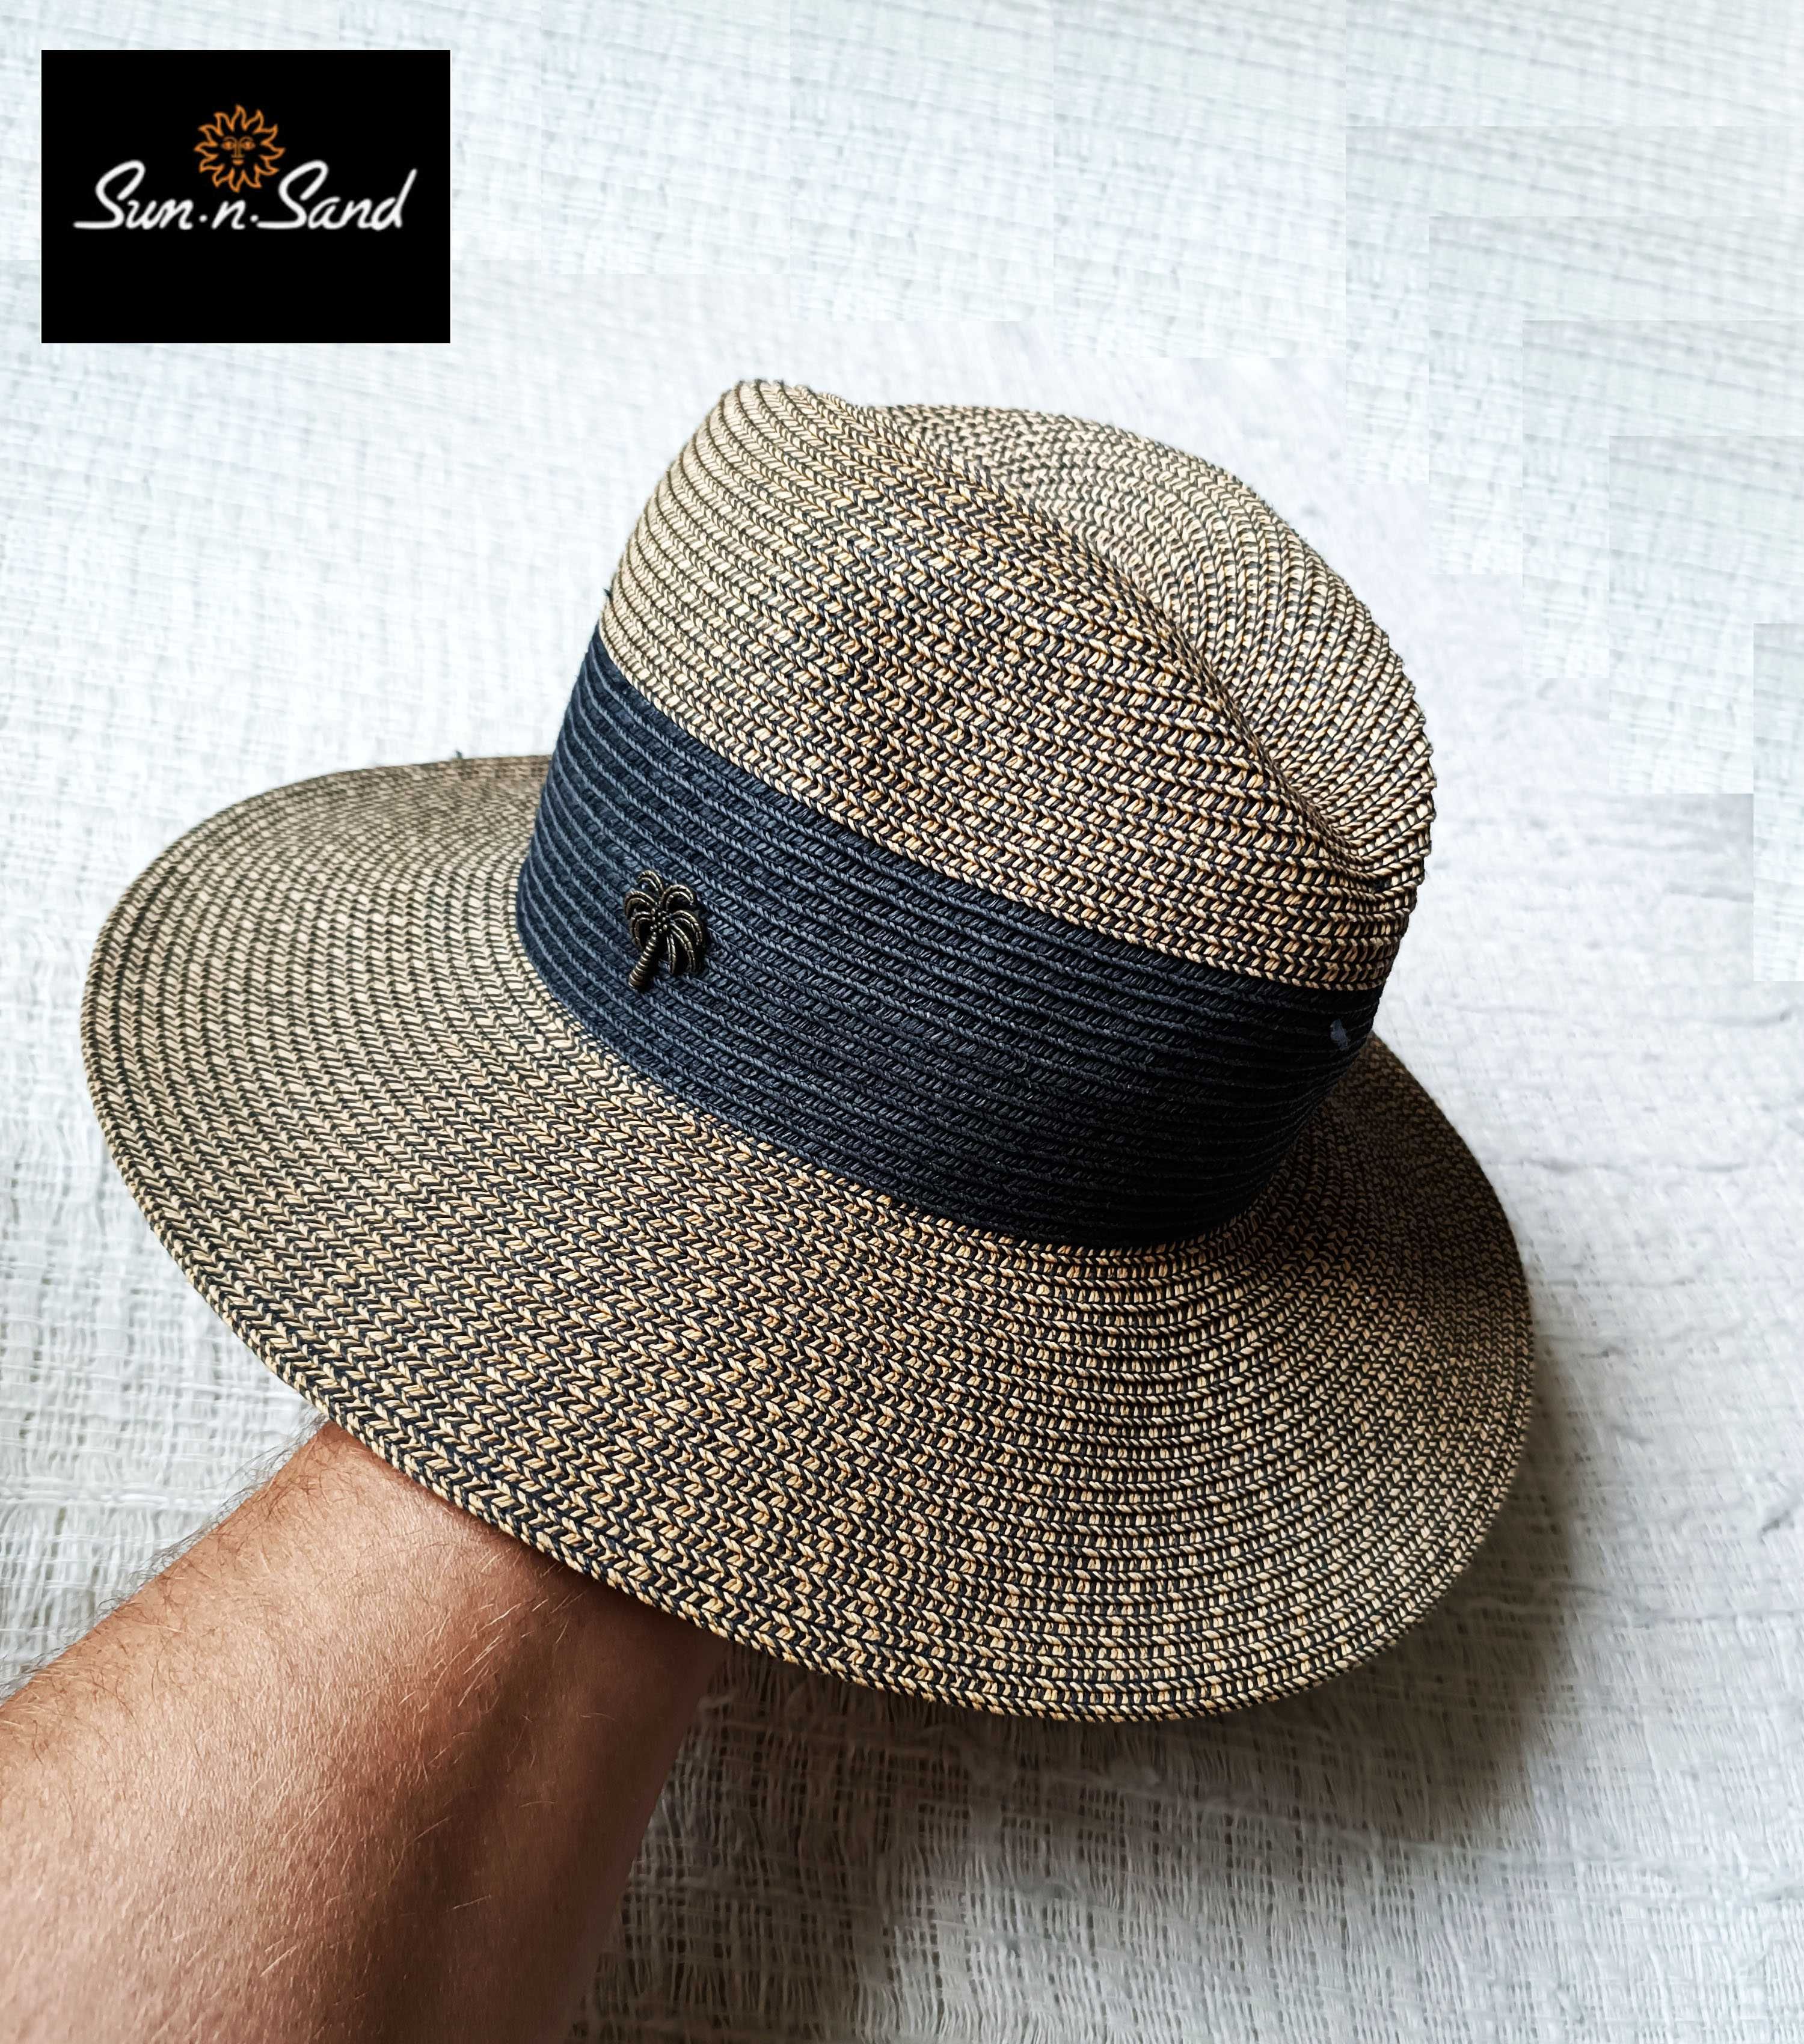 Шляпа Панама Sun’n’Sand. Оригинал. Новое состояние. Супер качество